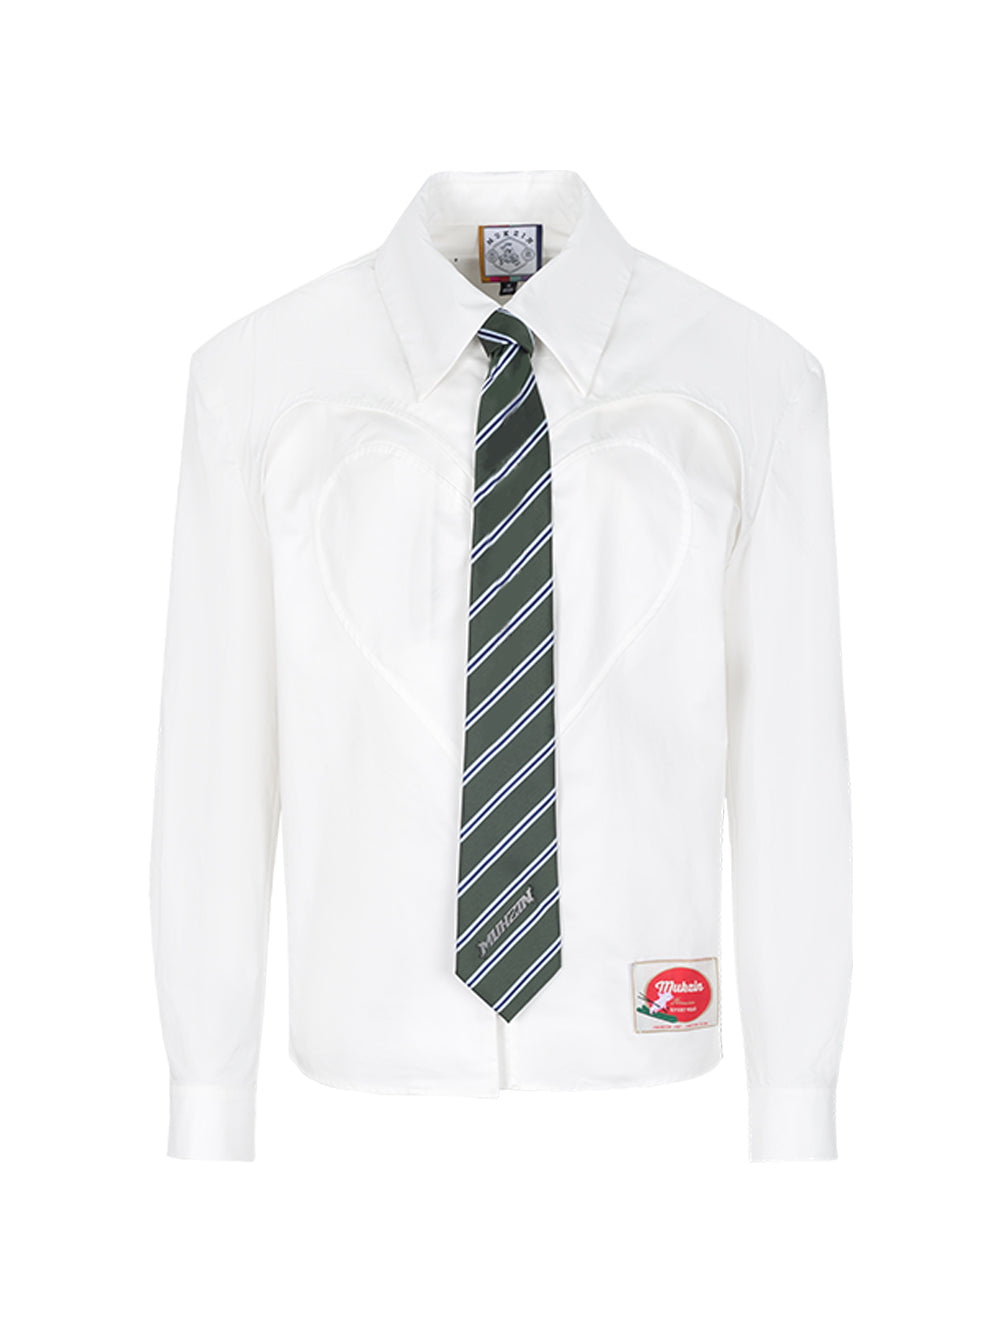 MUKZIN White Tie Commuter Long Sleeve Shirt